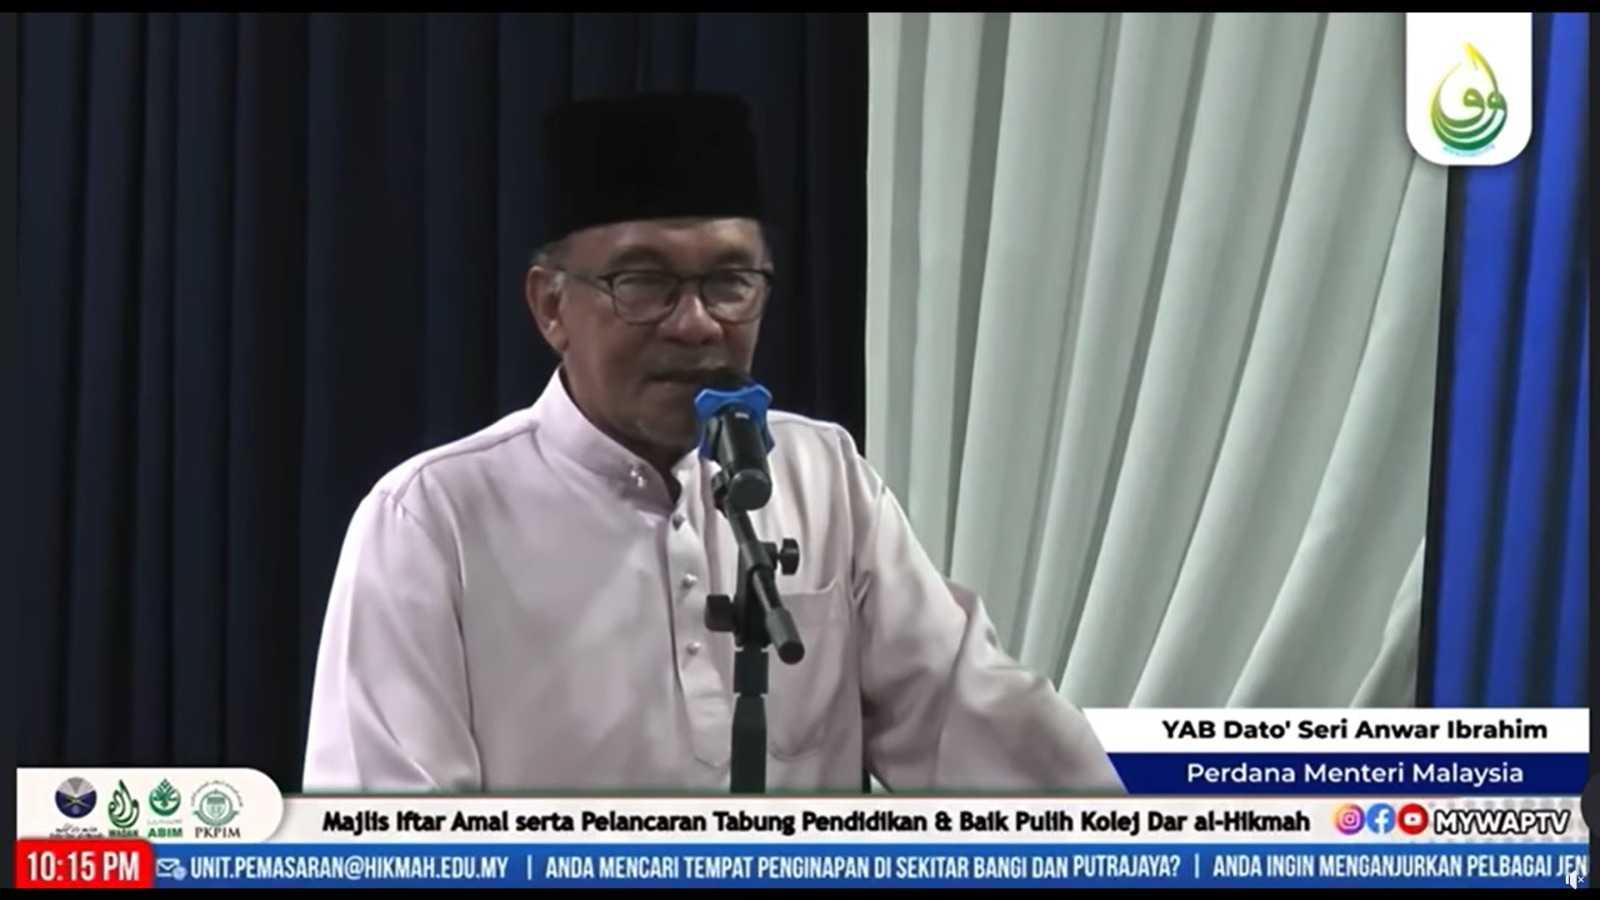 Anwar Ibrahim bercakap pada majlis mengumpul dana untuk sebuah kolej swasta di Kajang pada 19 April, di mana beliau menyebut hasil daripada penjualan rumahnya di Bukit Segambut. Gambar: Facebook